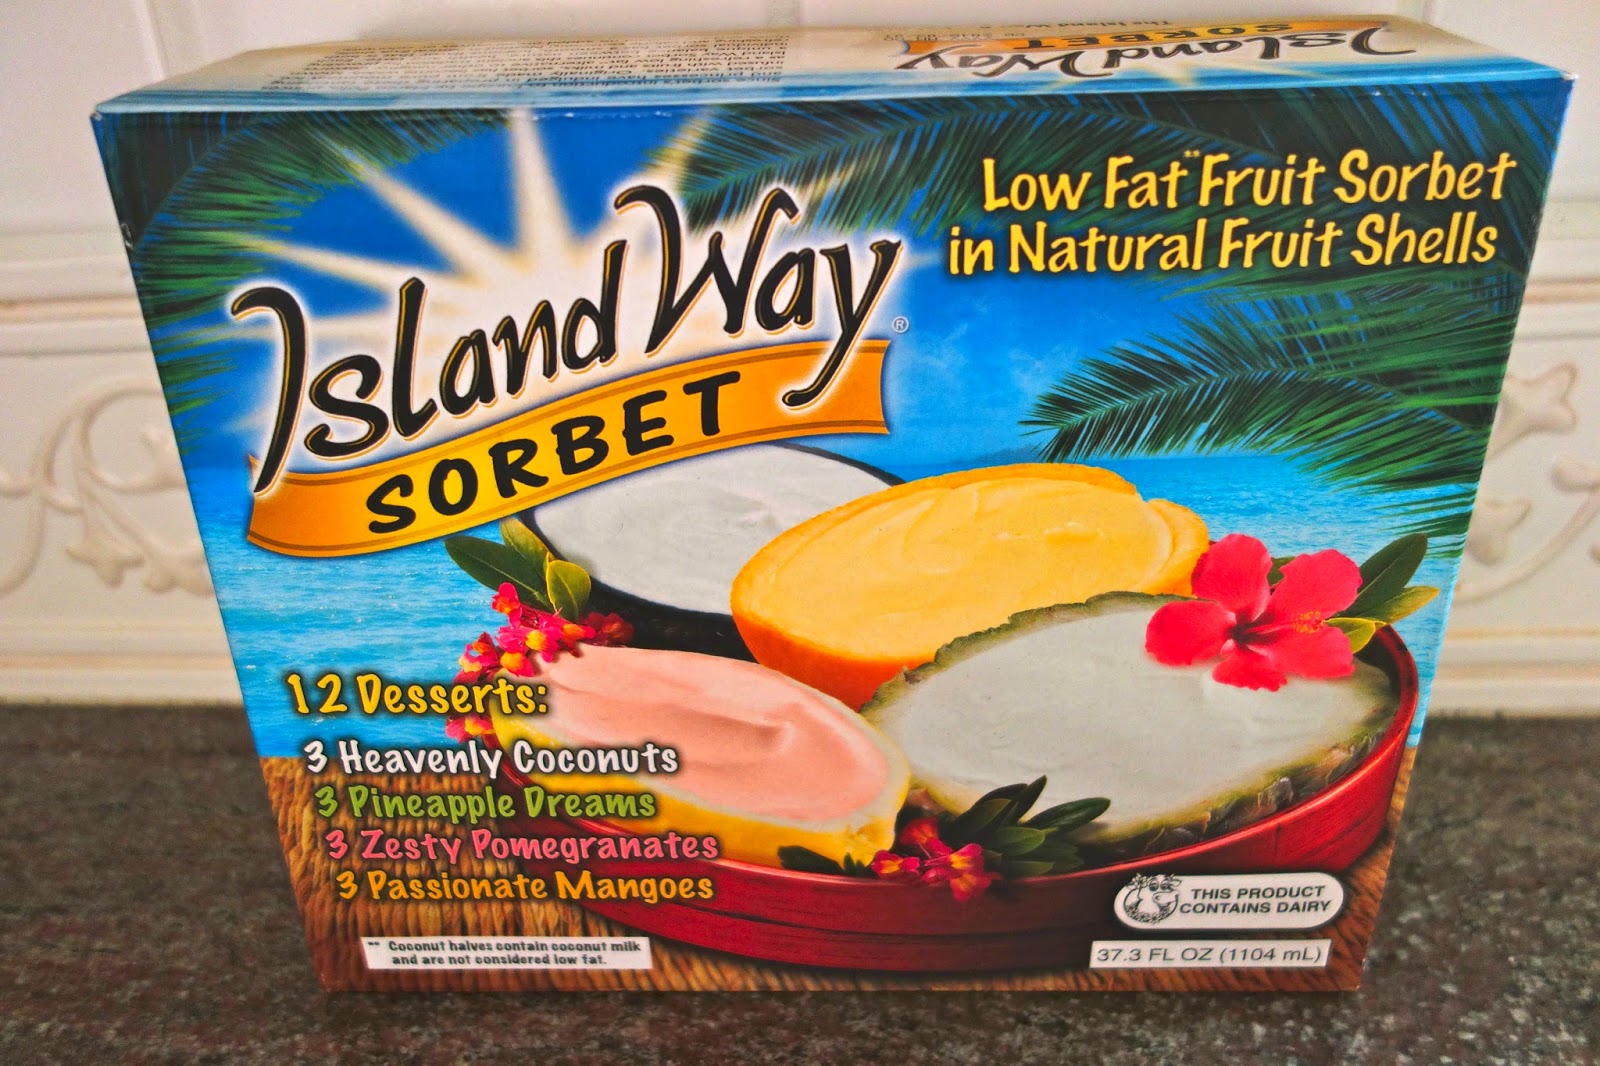 Island way. Island way мороженое сорбет. Мороженое сорбет манго. Сорбет манго в прямоугольной упаковке. Deluxe Fruit Sorbet.